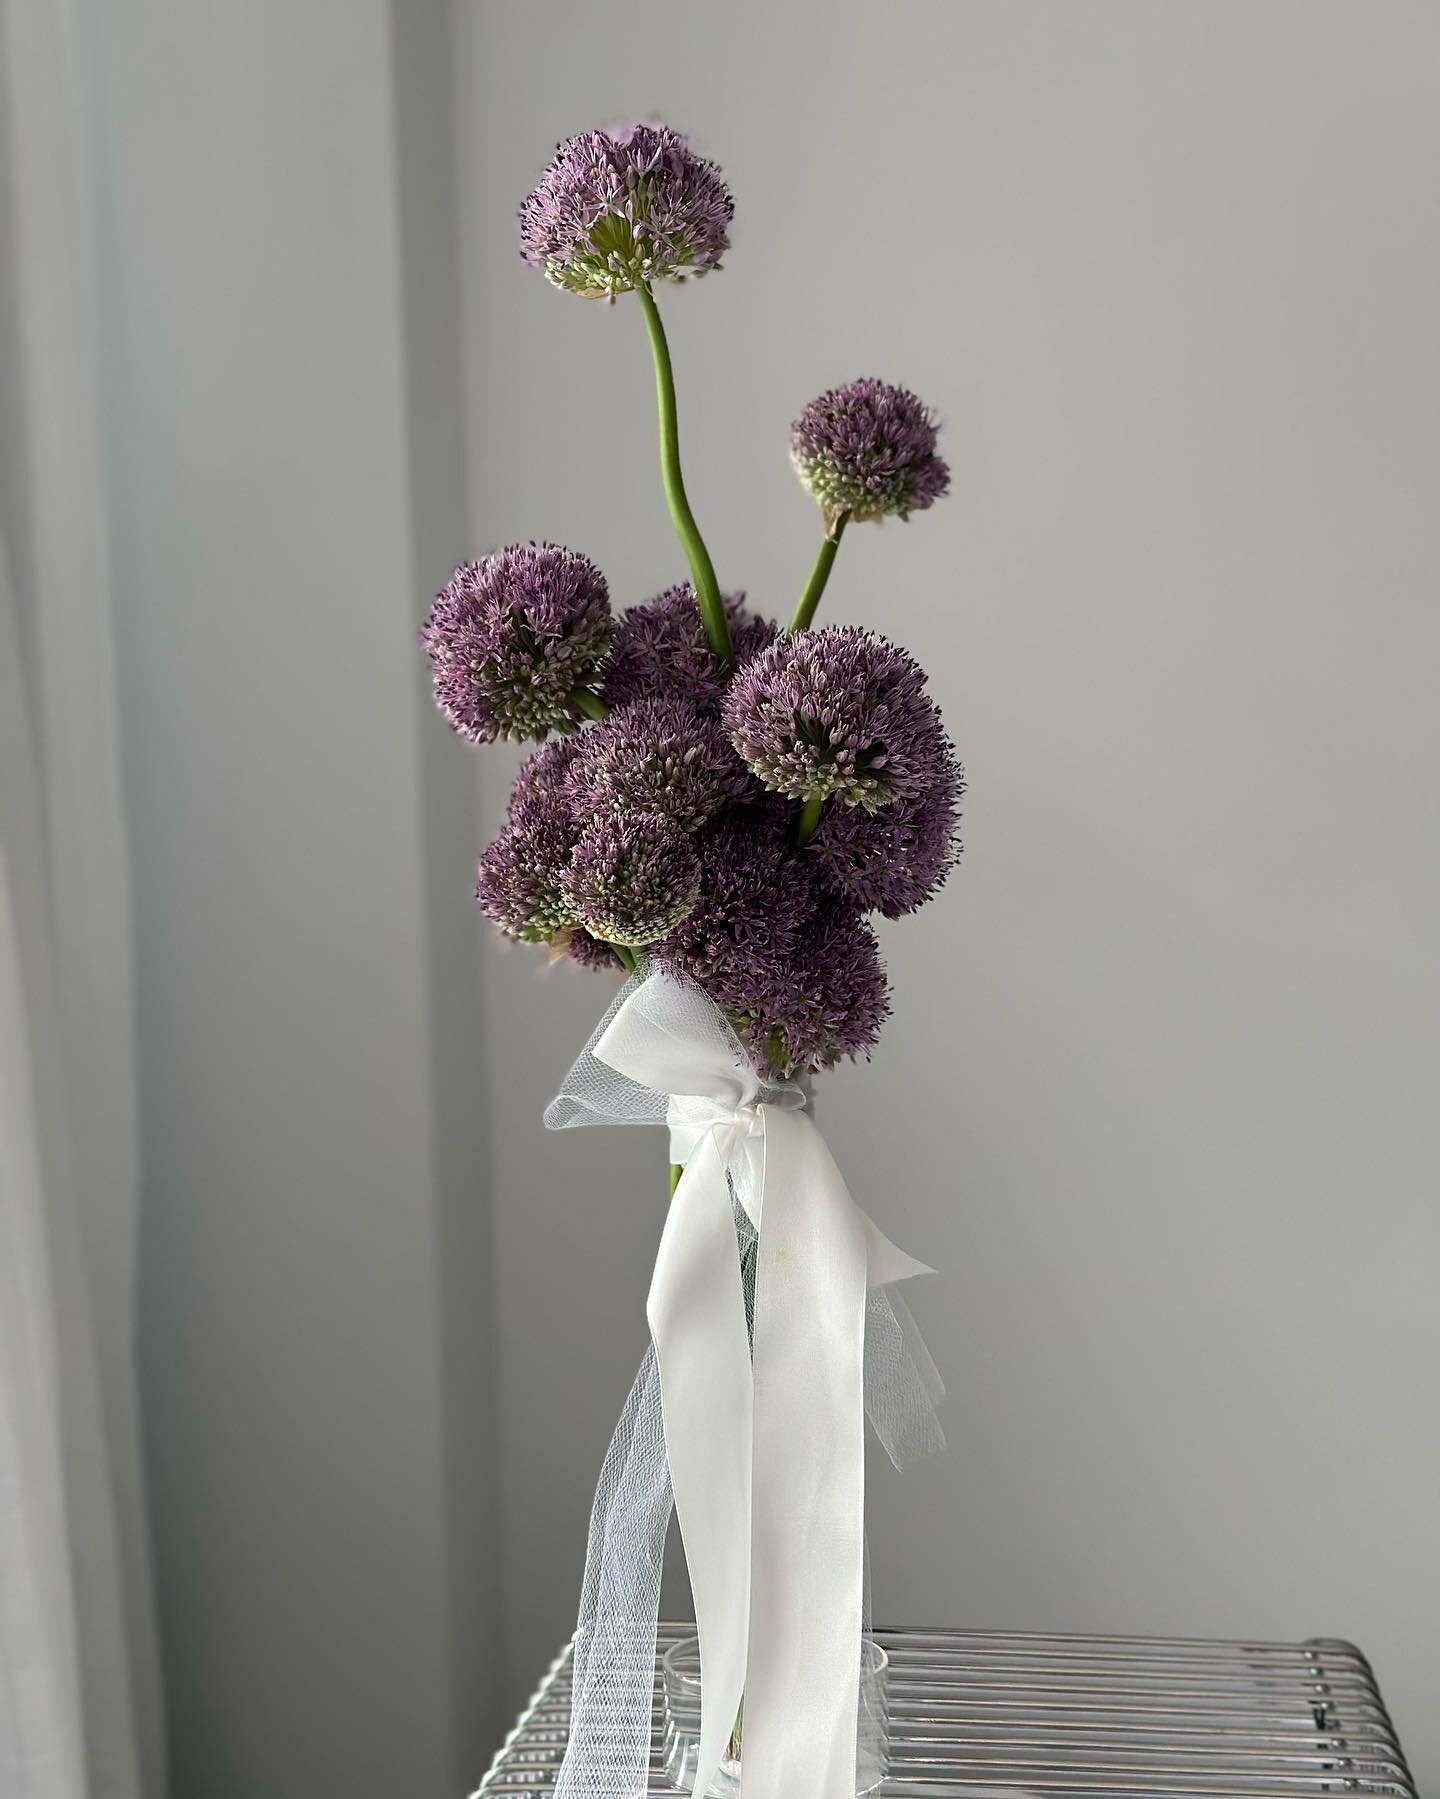 simple but effective
.
#allium #alliumbouquet
#bridalbouquet #simplebouquet #modernbuquet #photoshootday #weddingsnap